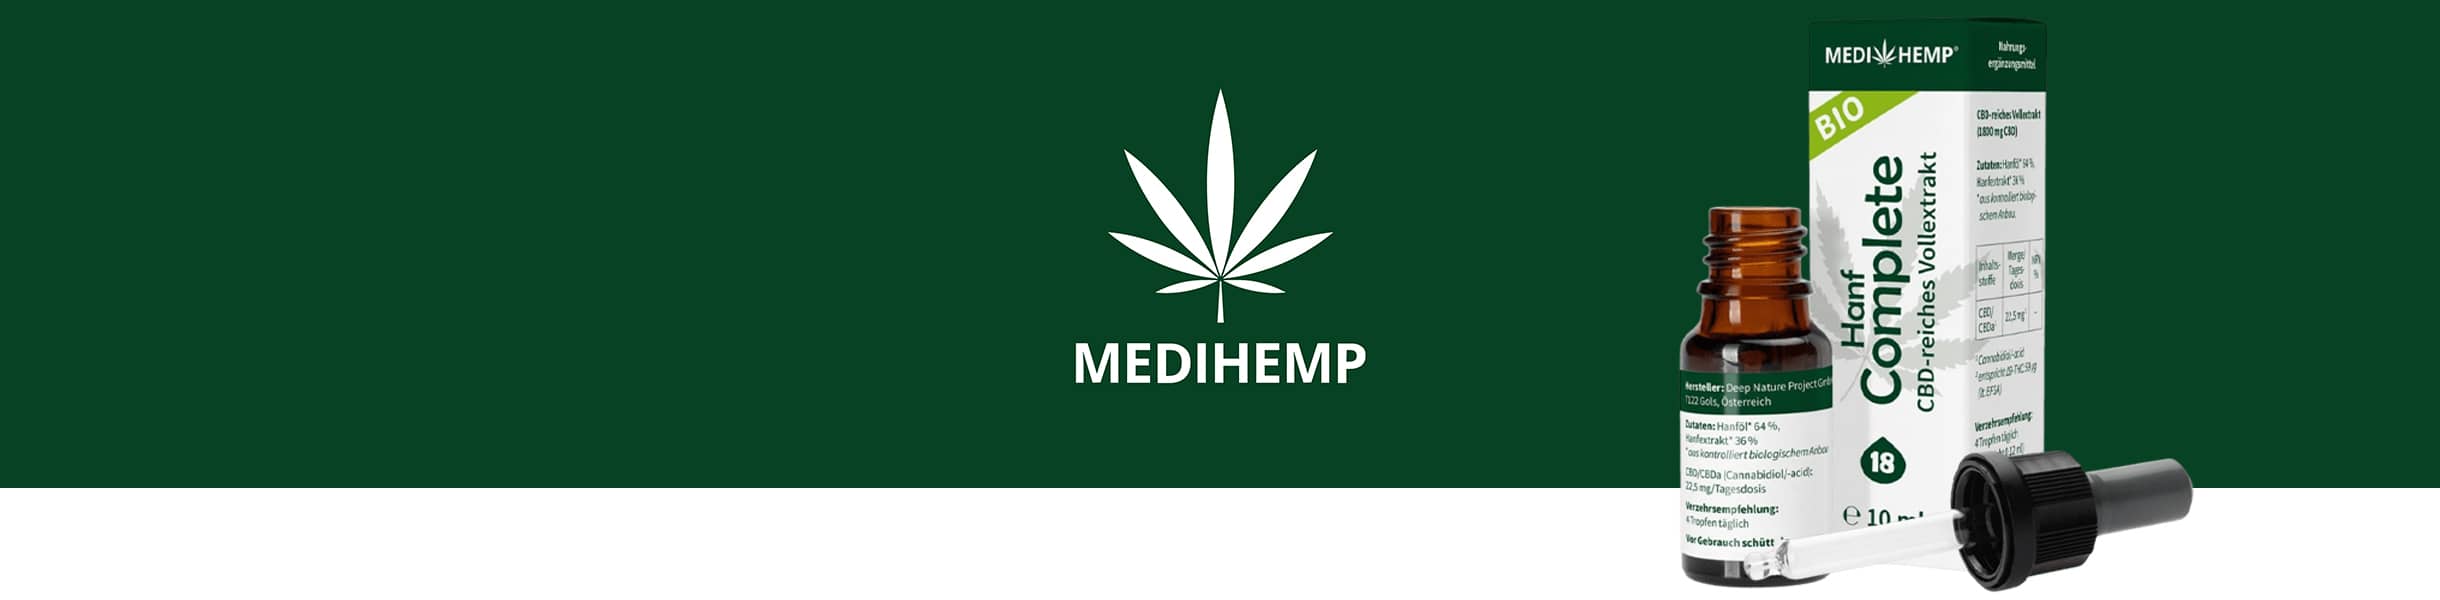 Medihemp Online Shop